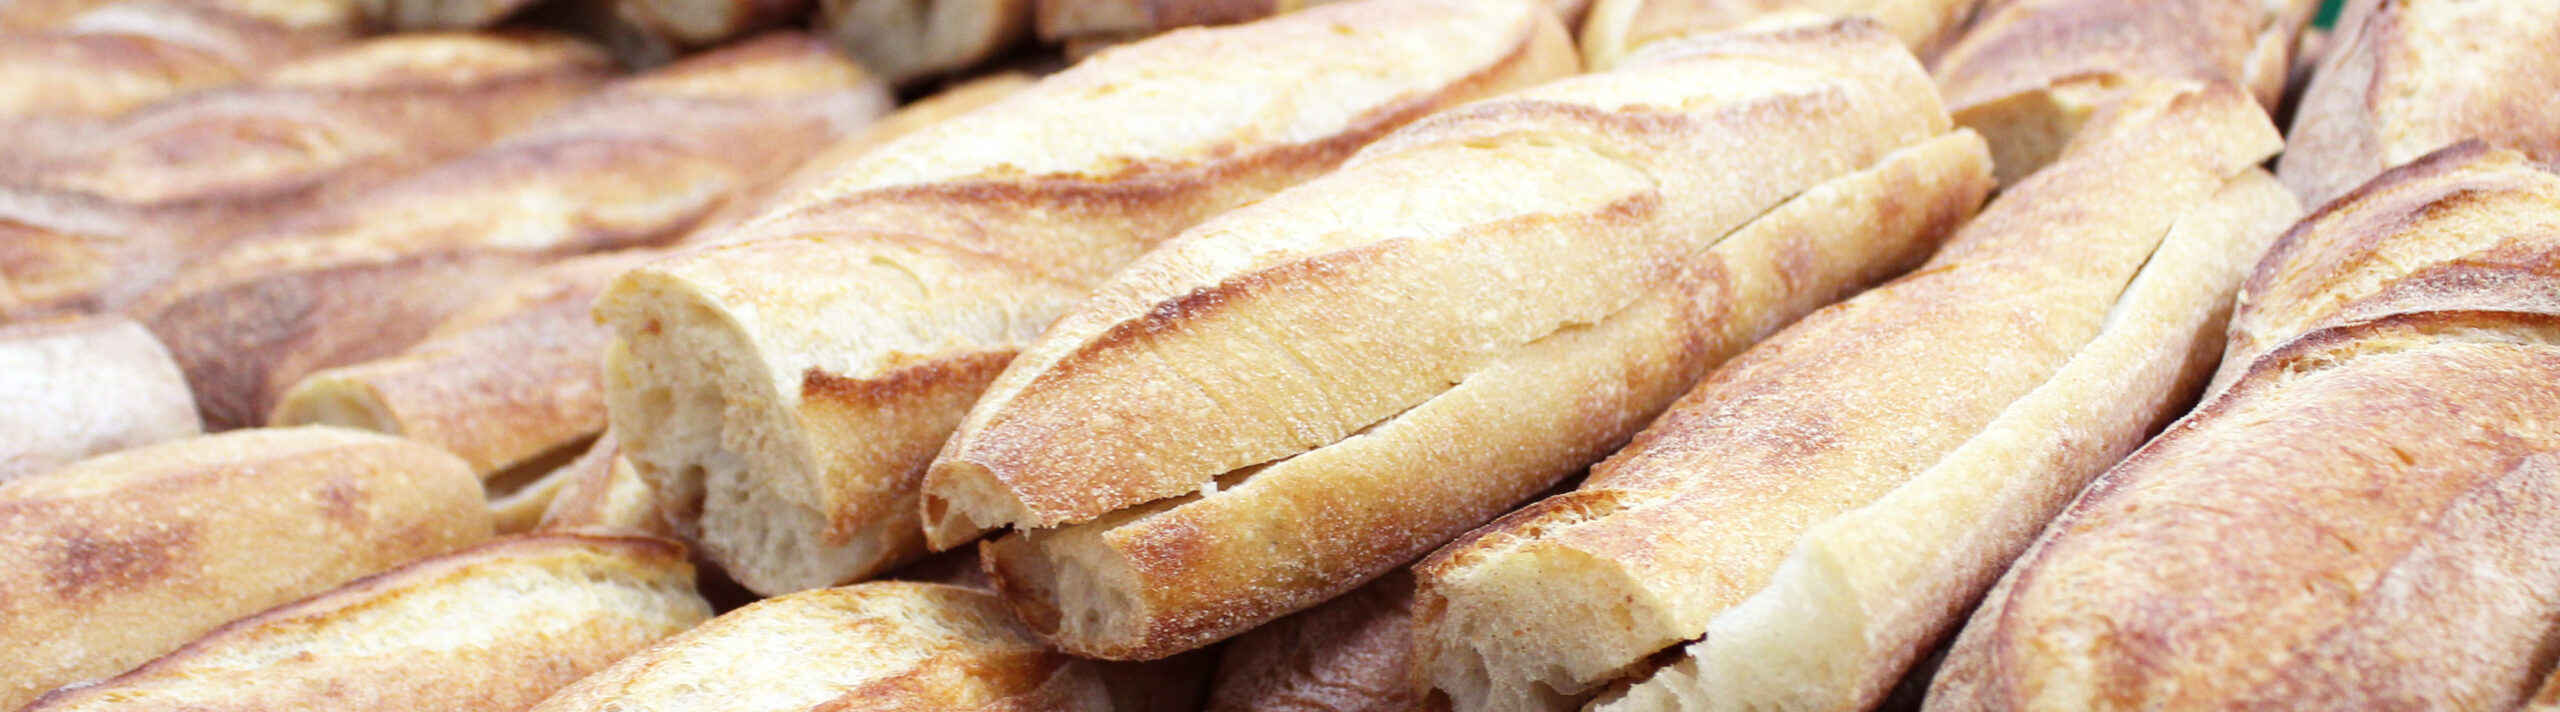 Sliced breads stacked together.